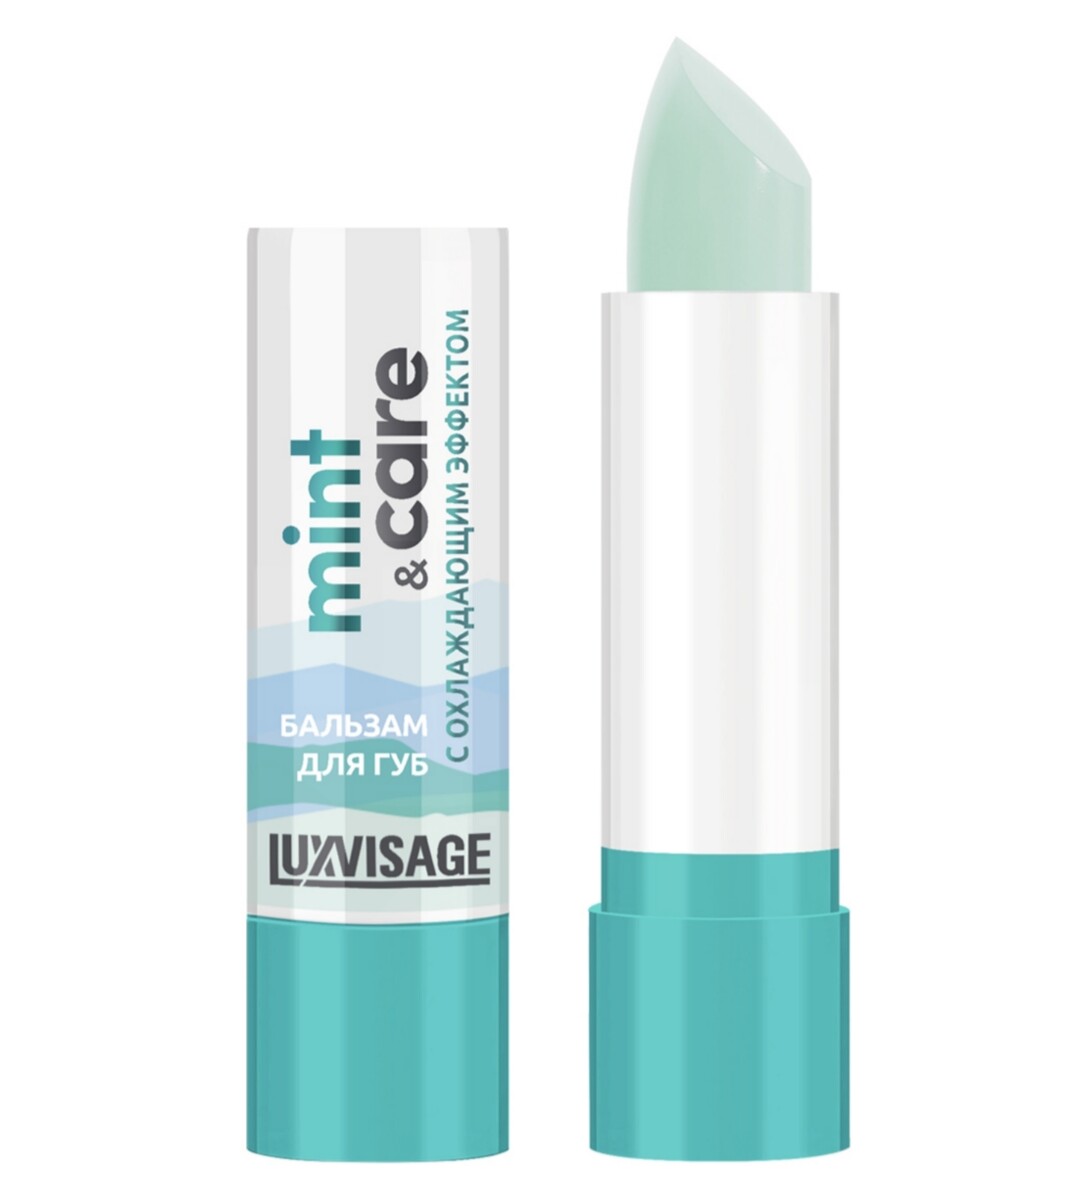 Luxvisage бальзам для губ luxvisage mint & care с охлаждающим эффектом 3,9г масло бальзам для губ miracle care тон